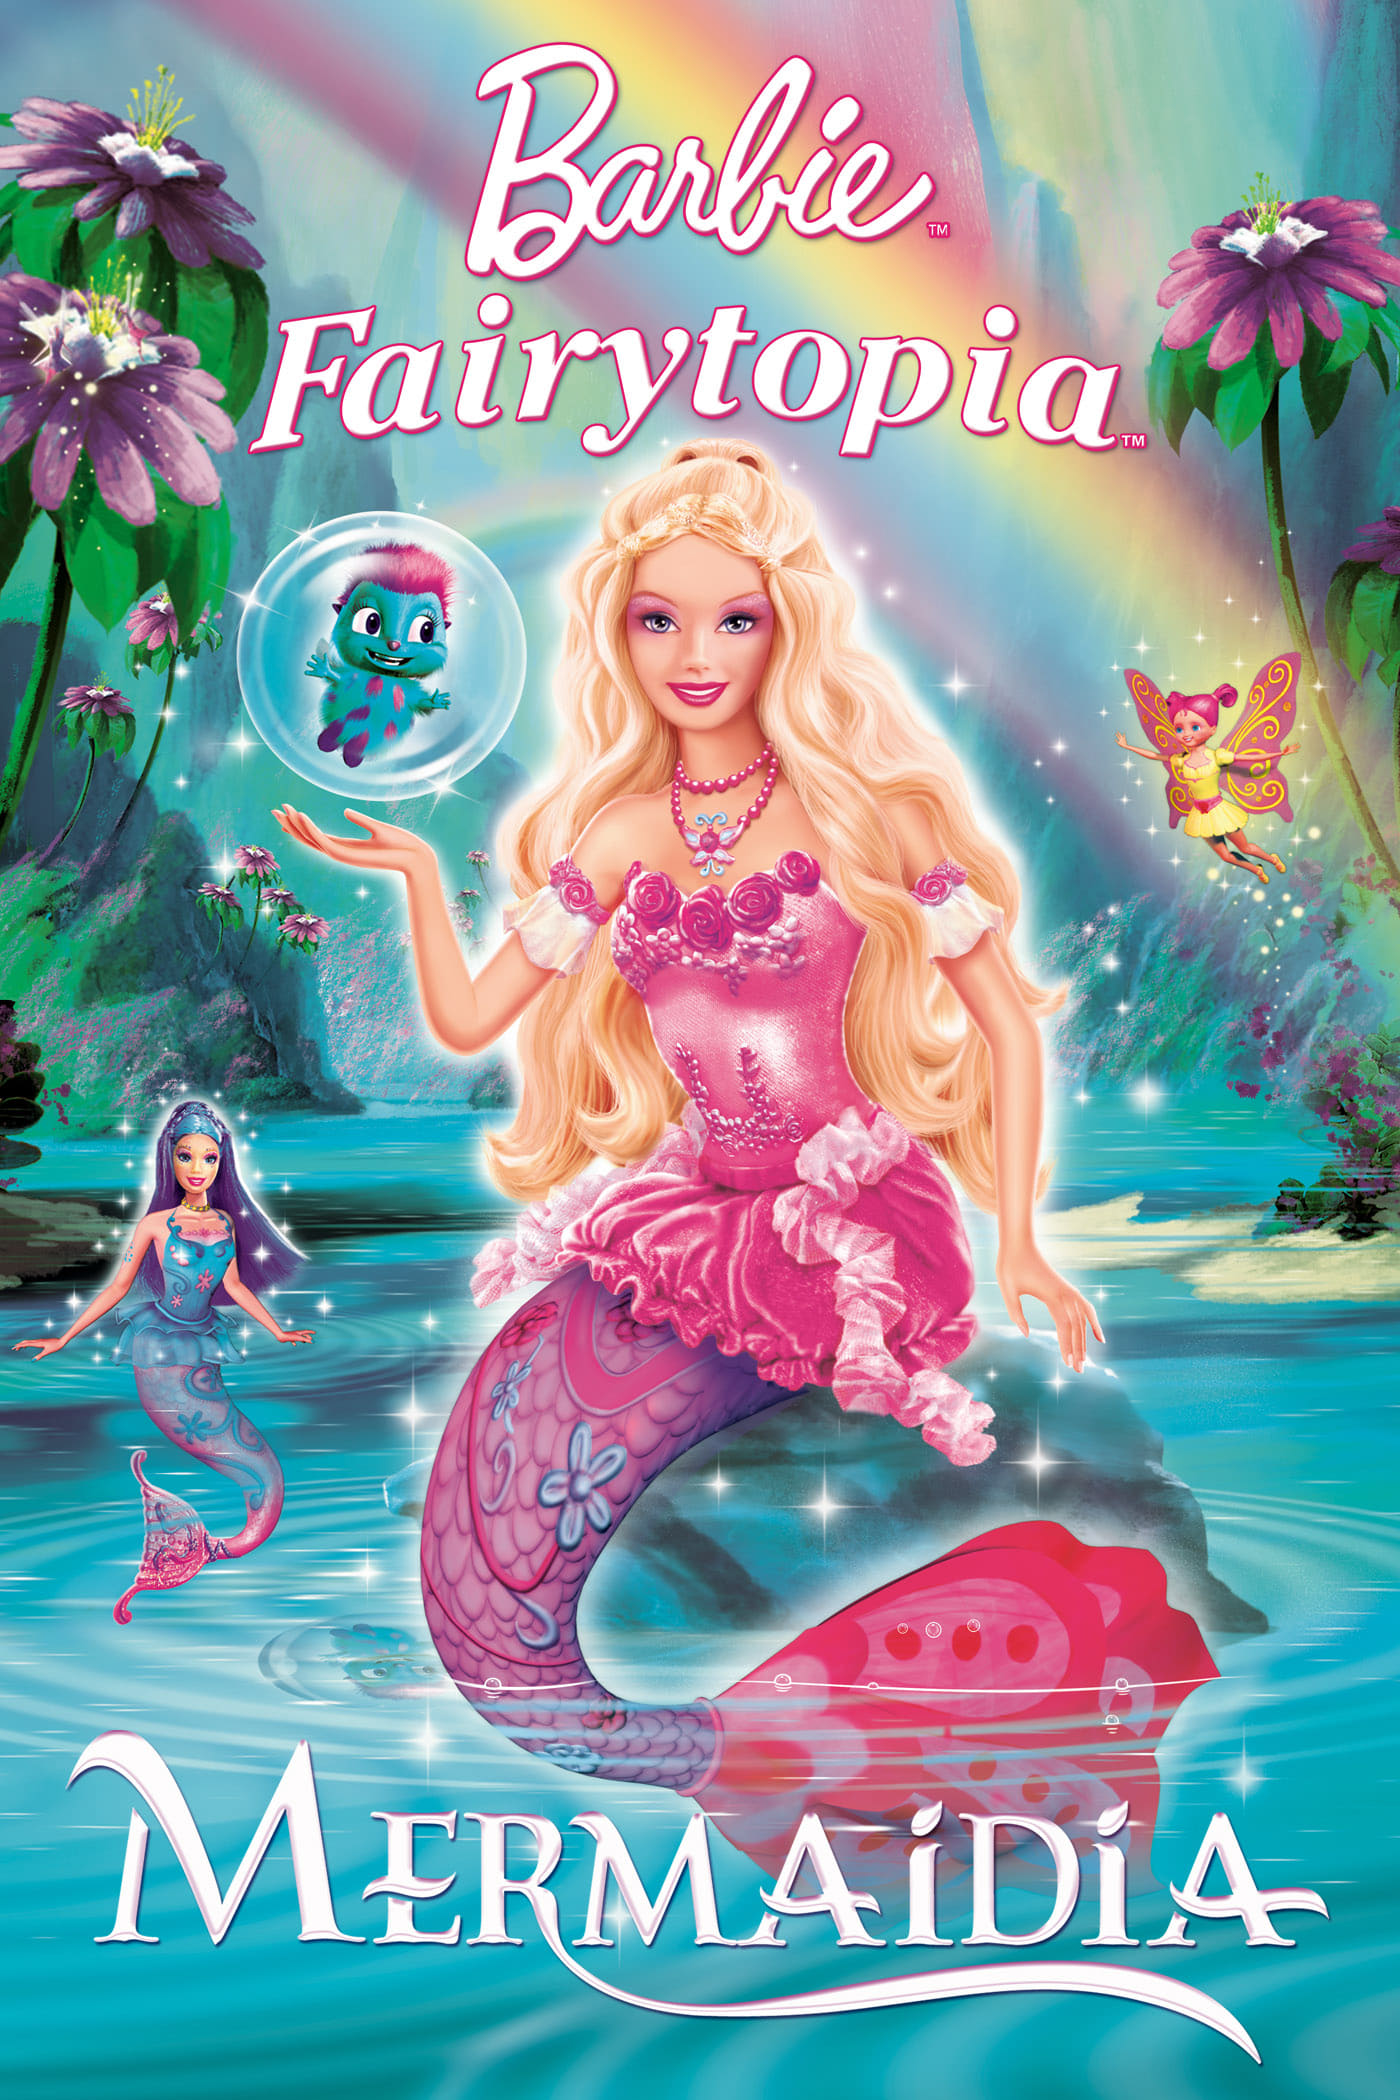 Chuyện Thần Tiên Barbie: Xứ Sở Mermaidia (Barbie Fairytopia: Mermaidia) [2006]